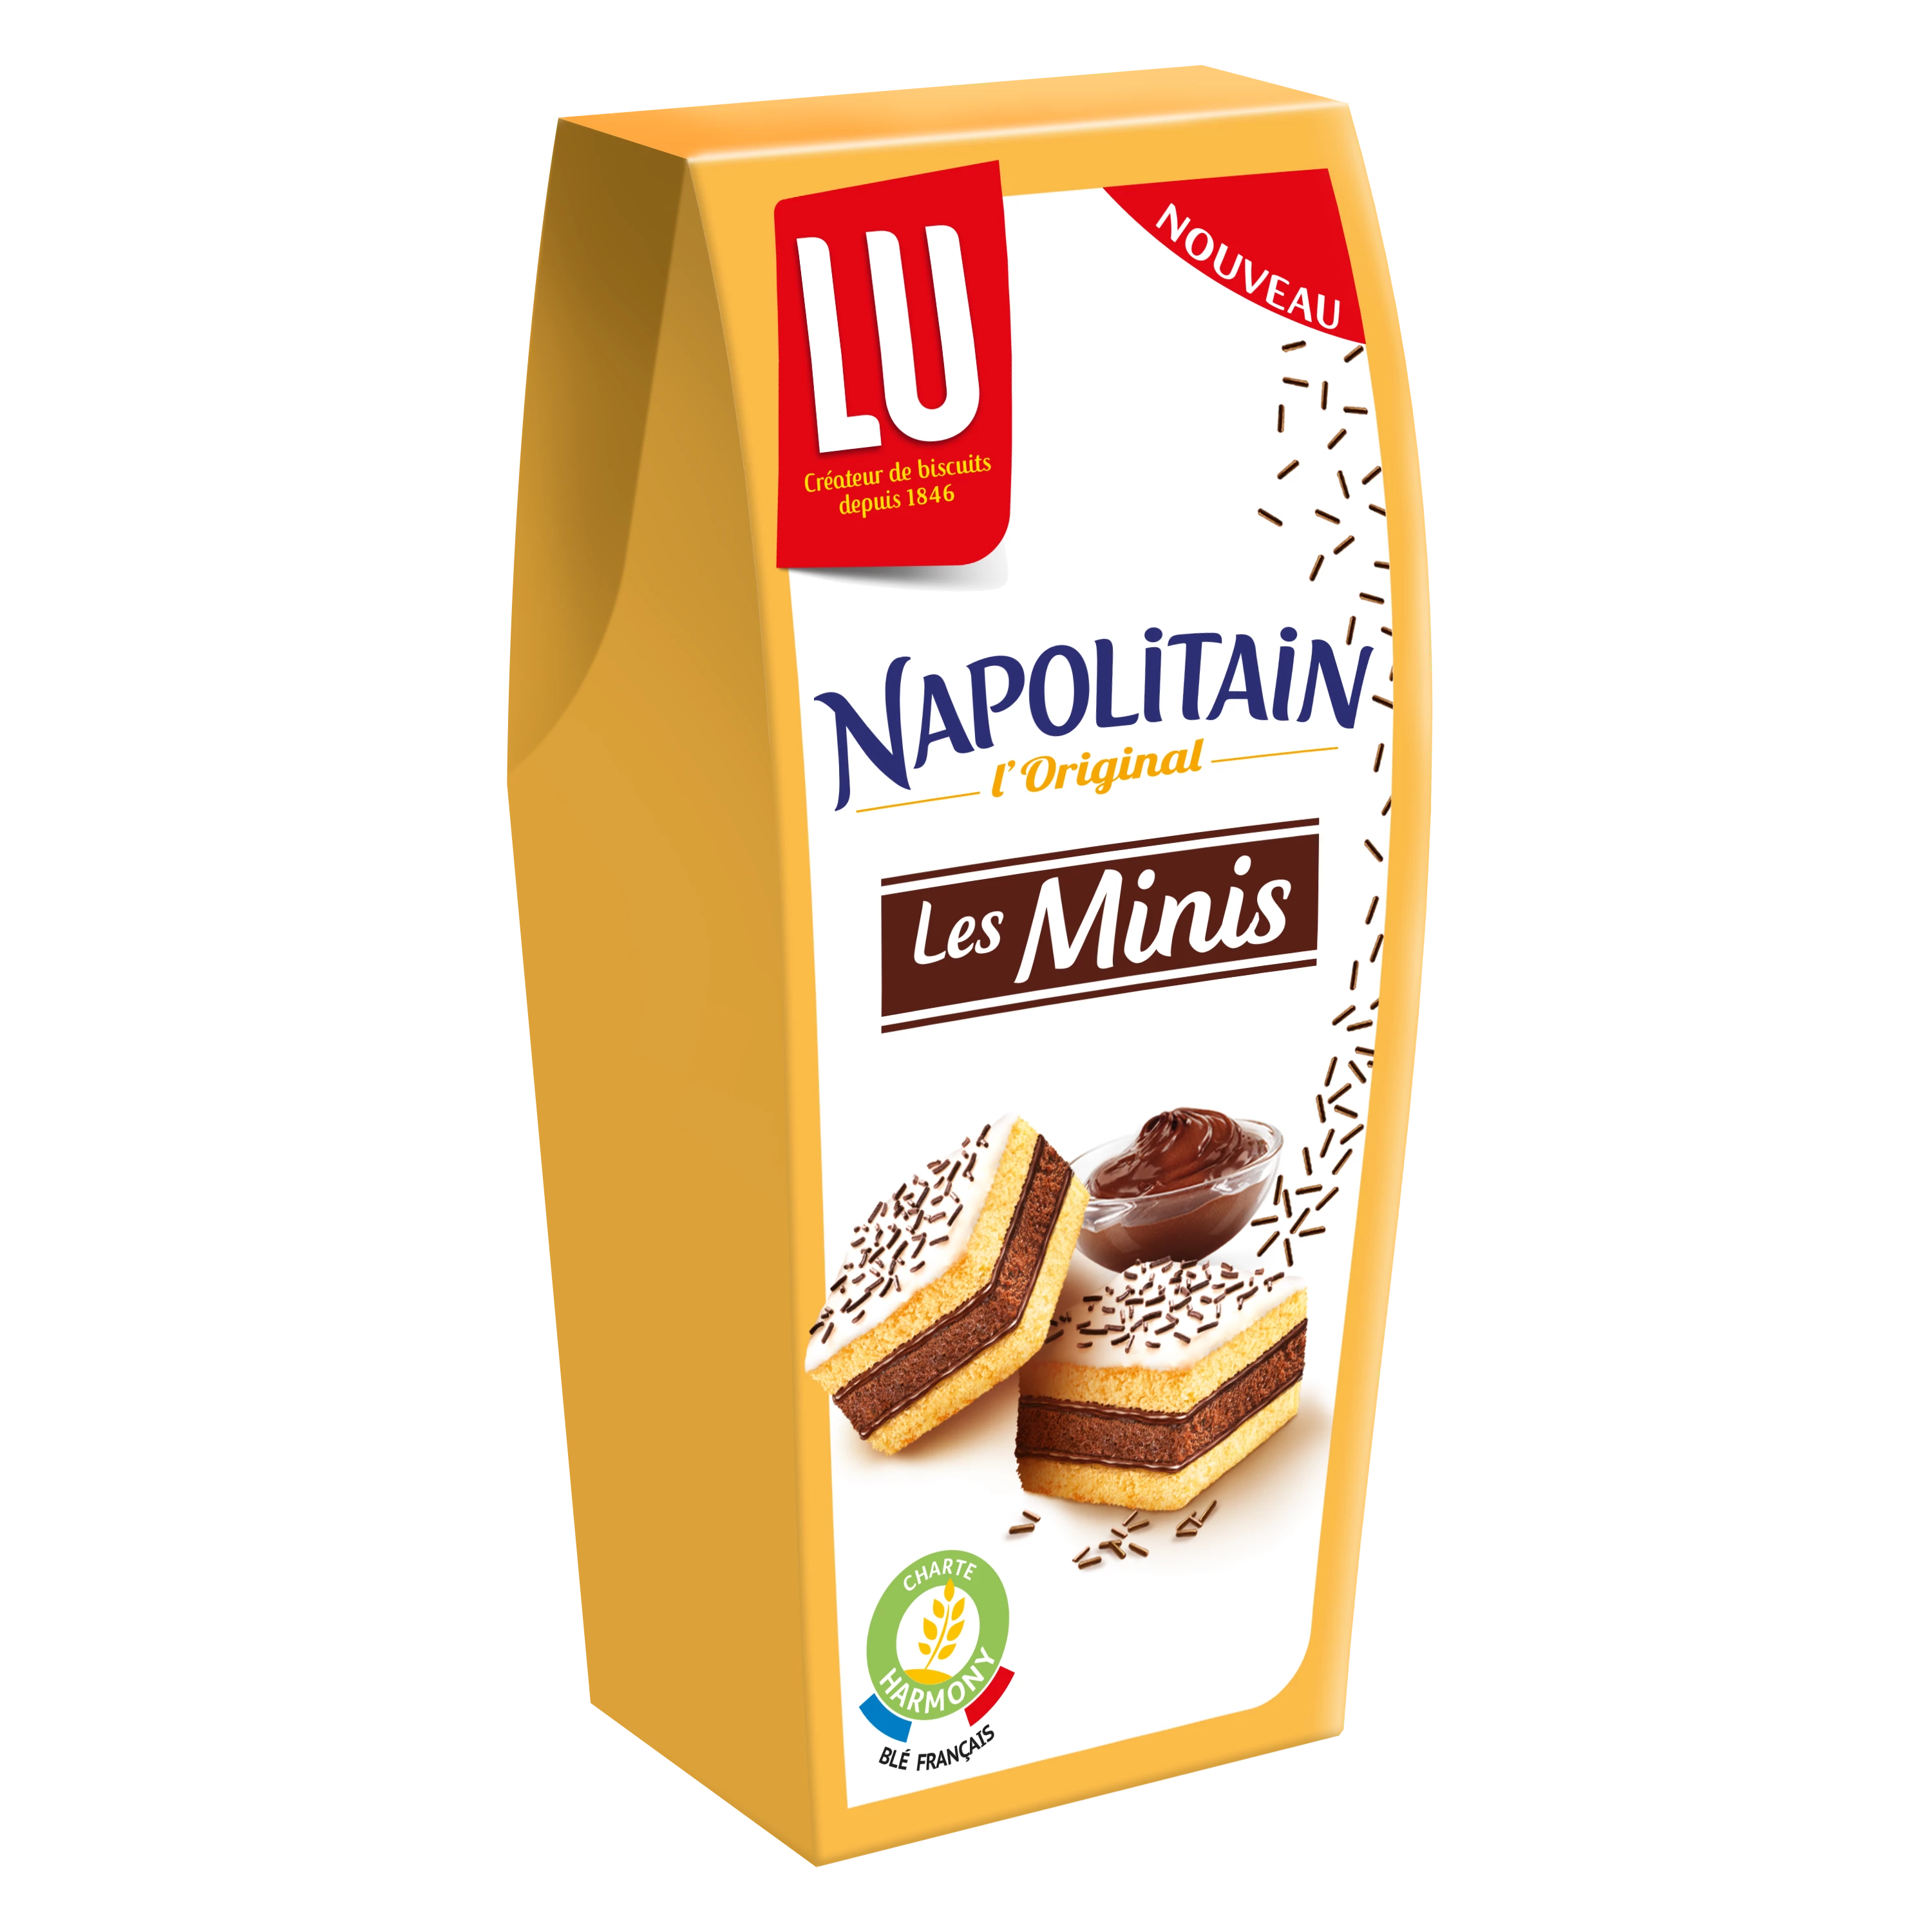 Les Minis Napolitain chocolate cakes, 90g - LU